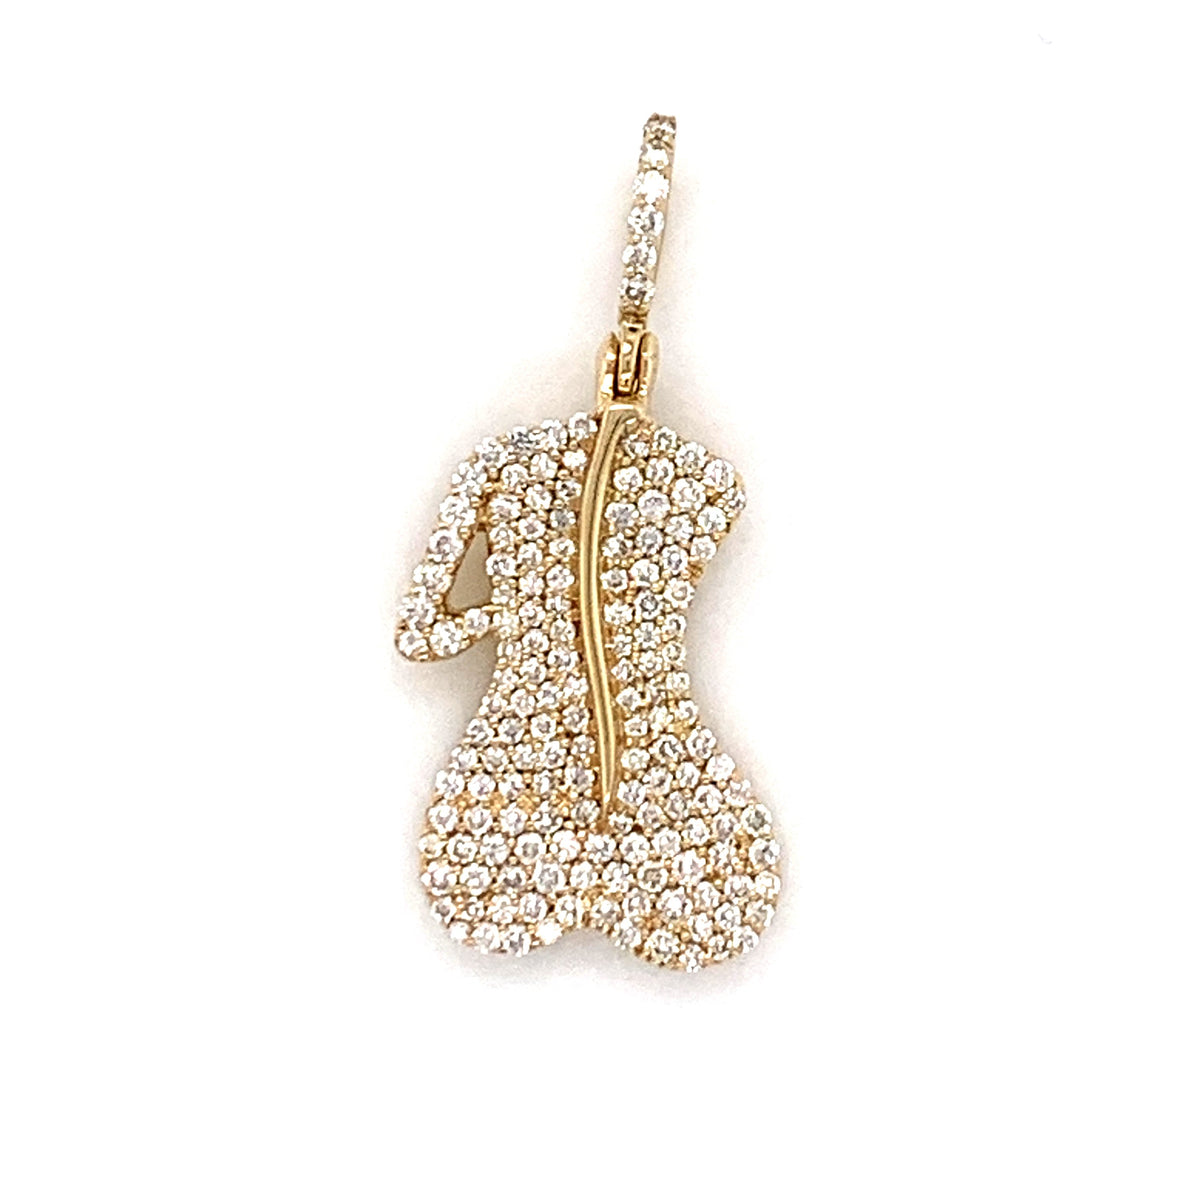 0.90 CT. Diamond Lady's Silhouette Pendant in 10K Gold - White Carat Diamonds 